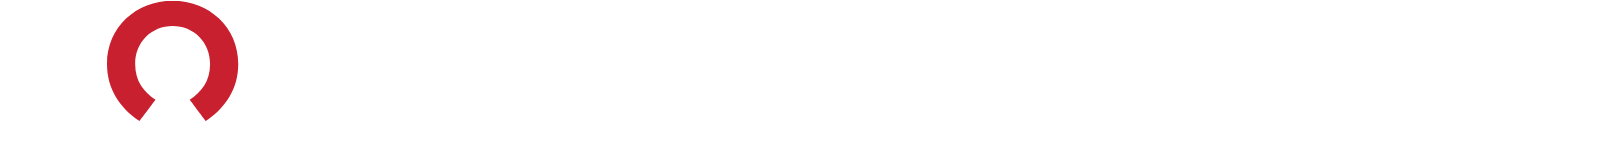 Rocket Companies
 Logo groß für dunkle Hintergründe (transparentes PNG)